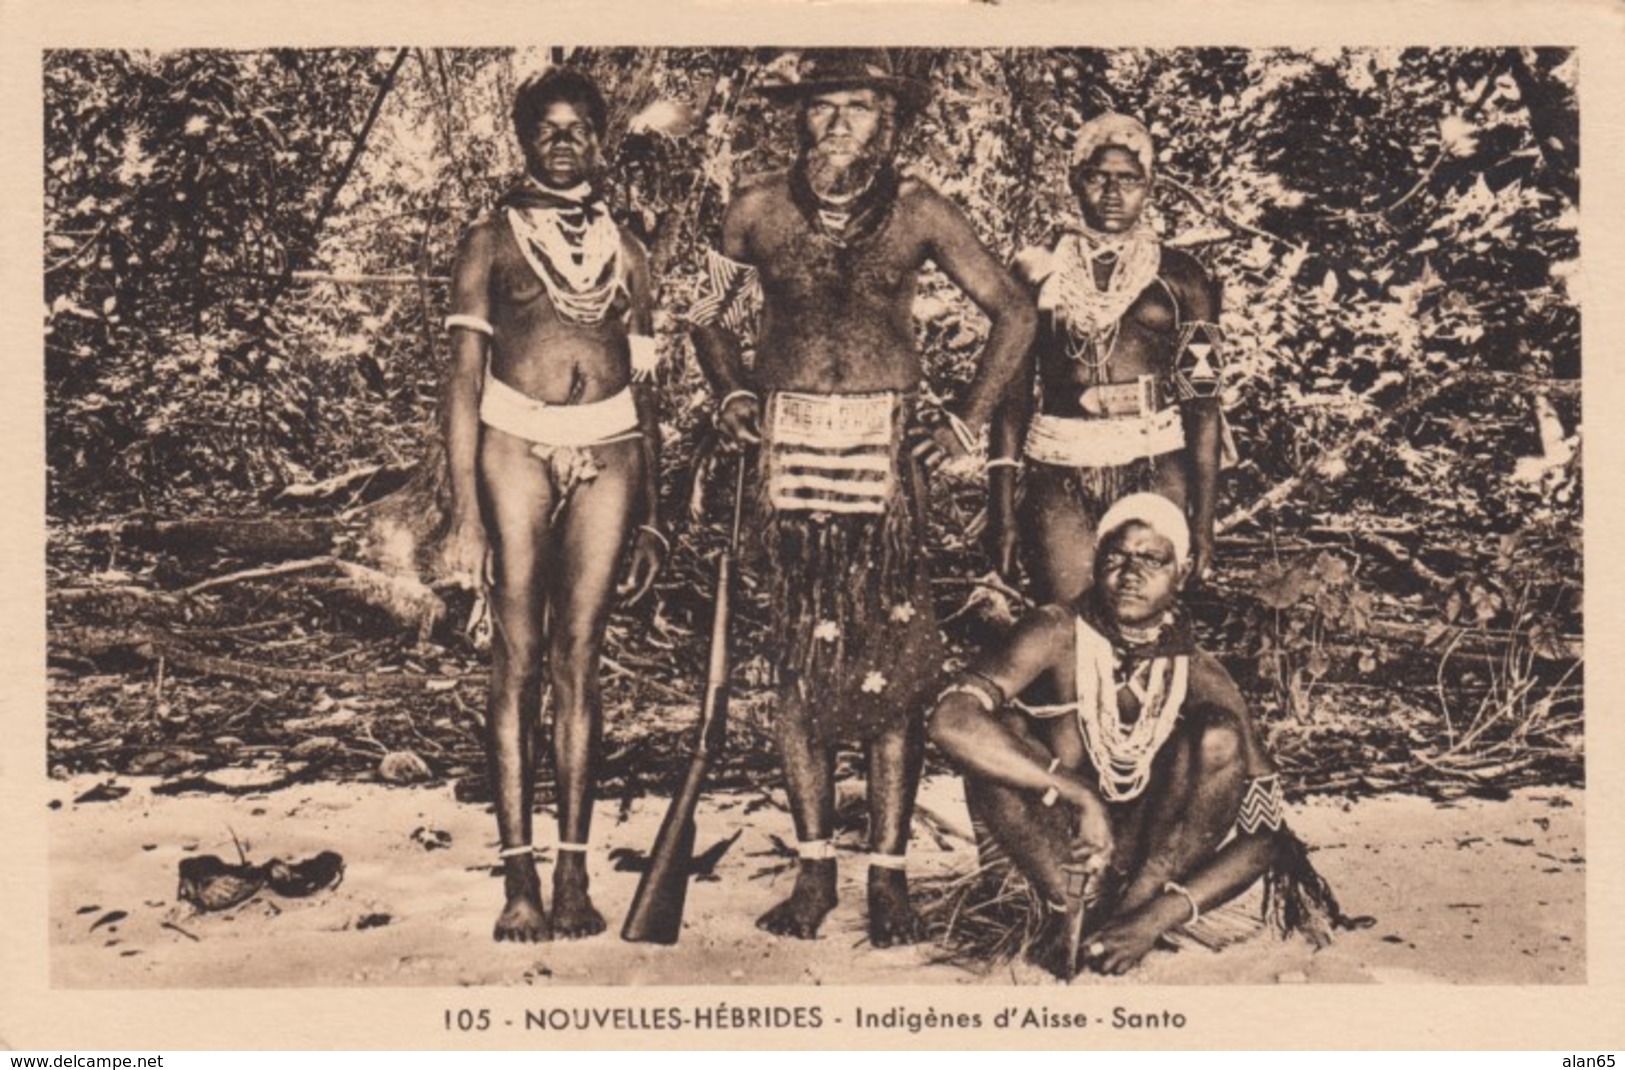 New Hebrides Indigenes D'Aisse-Santo Natives Ethnic Group Now Vanuatu, C1920s/30s Vintage Postcard - Vanuatu